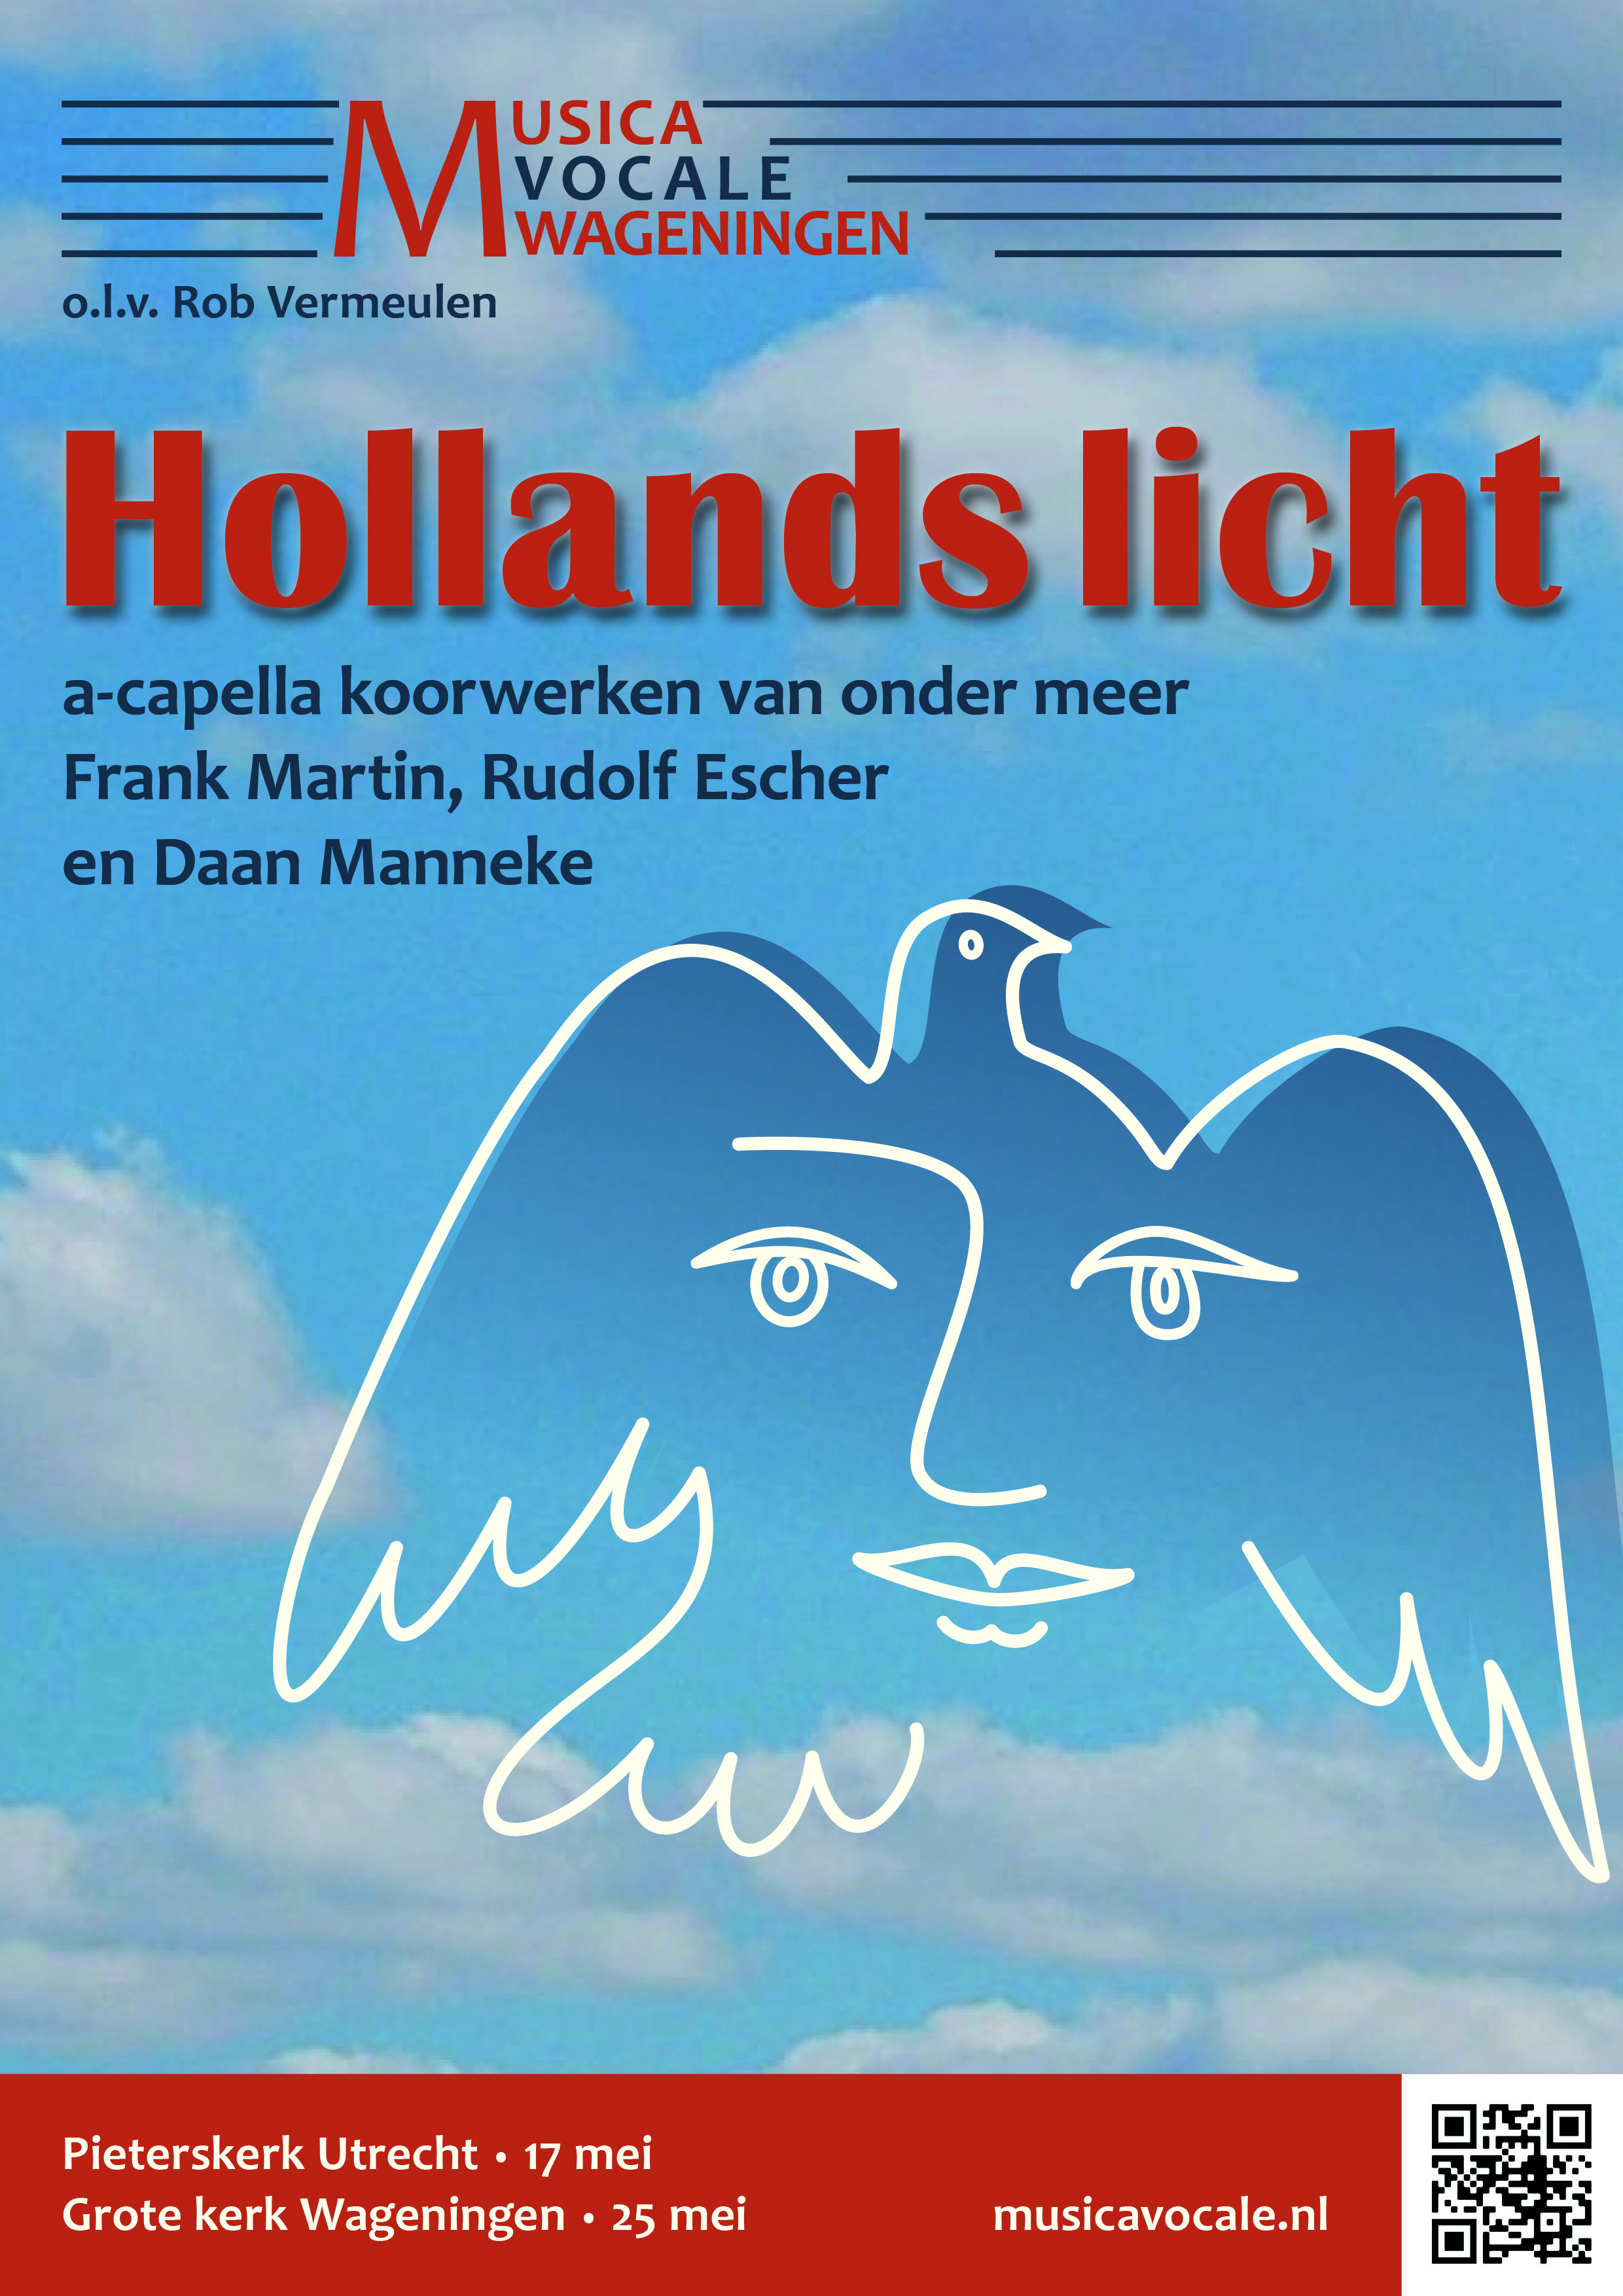 Hollands Licht - a-capella koormuziek van Nederlandse bodem